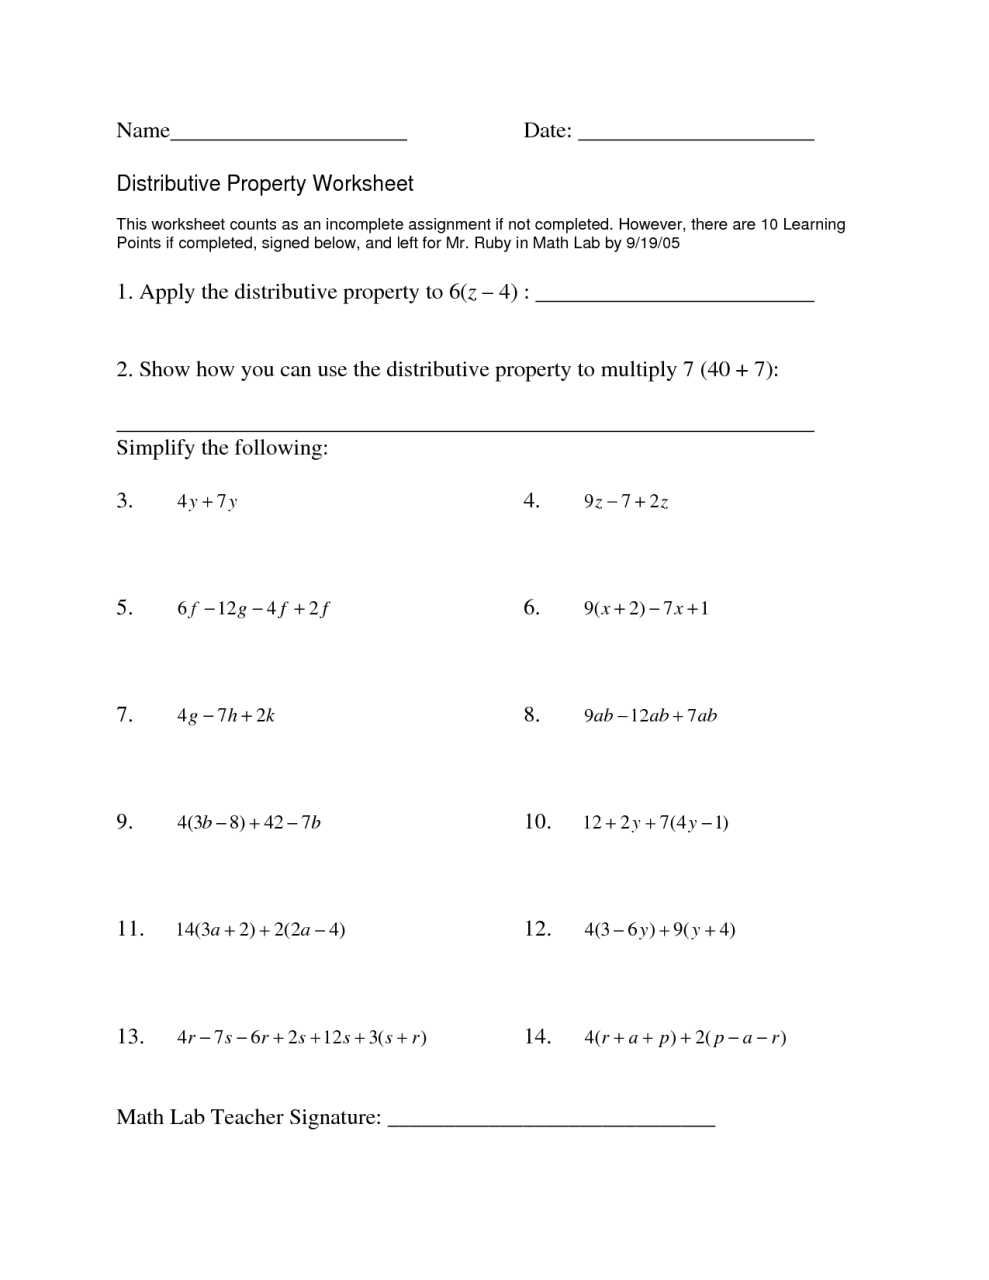 Distributive Property Of Multiplication Worksheets Pdf Times Tables